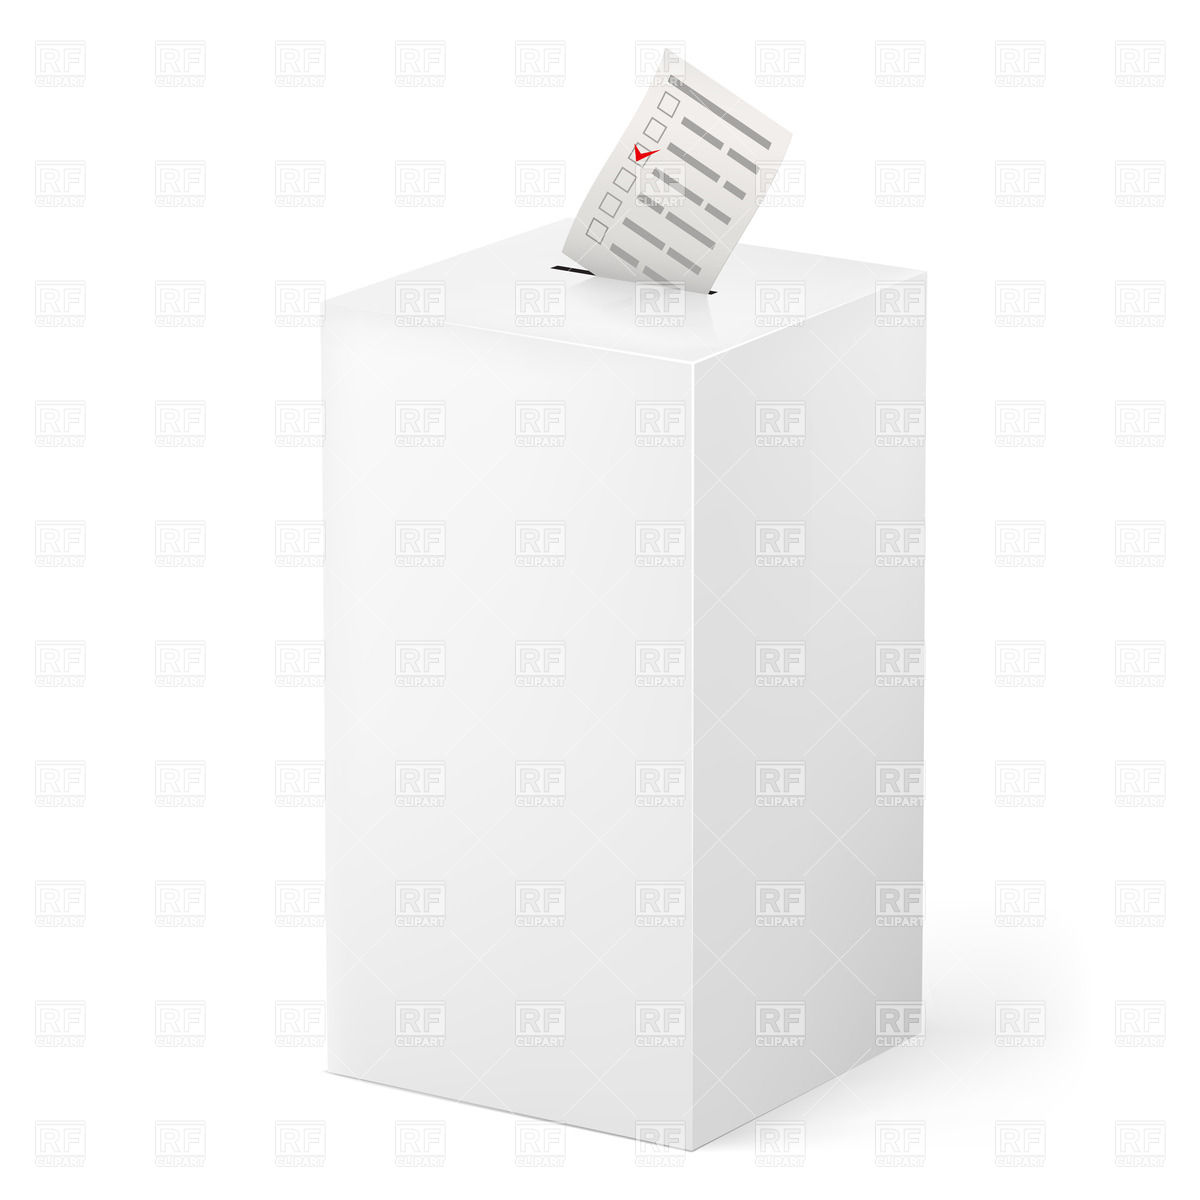 Ballot Box With Ballot Paper   Voting Symbols Download Royalty Free